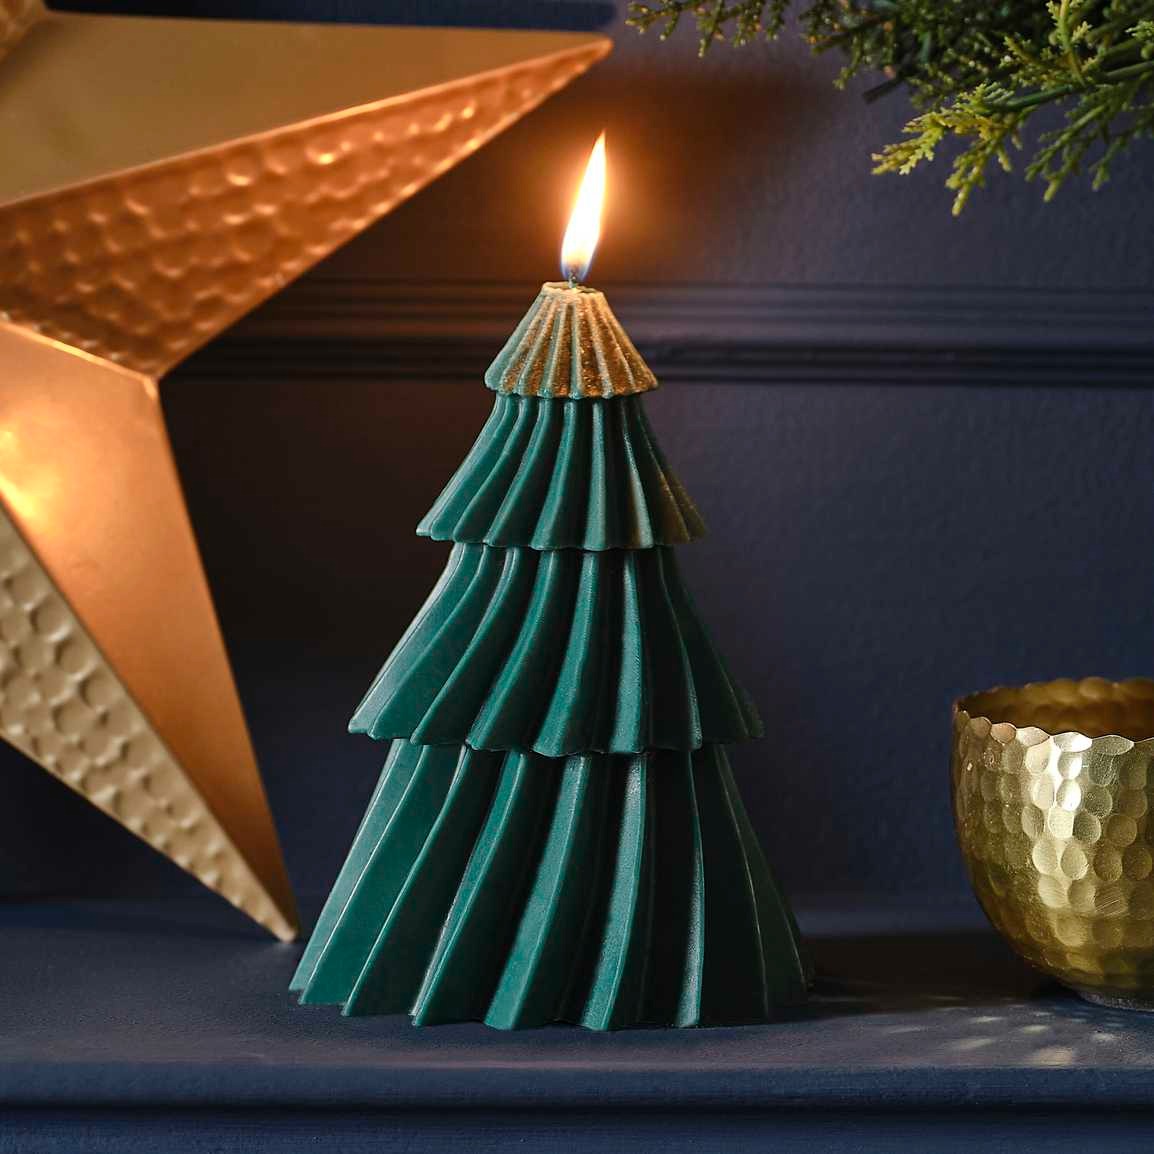 Decorative candle Christmas tree